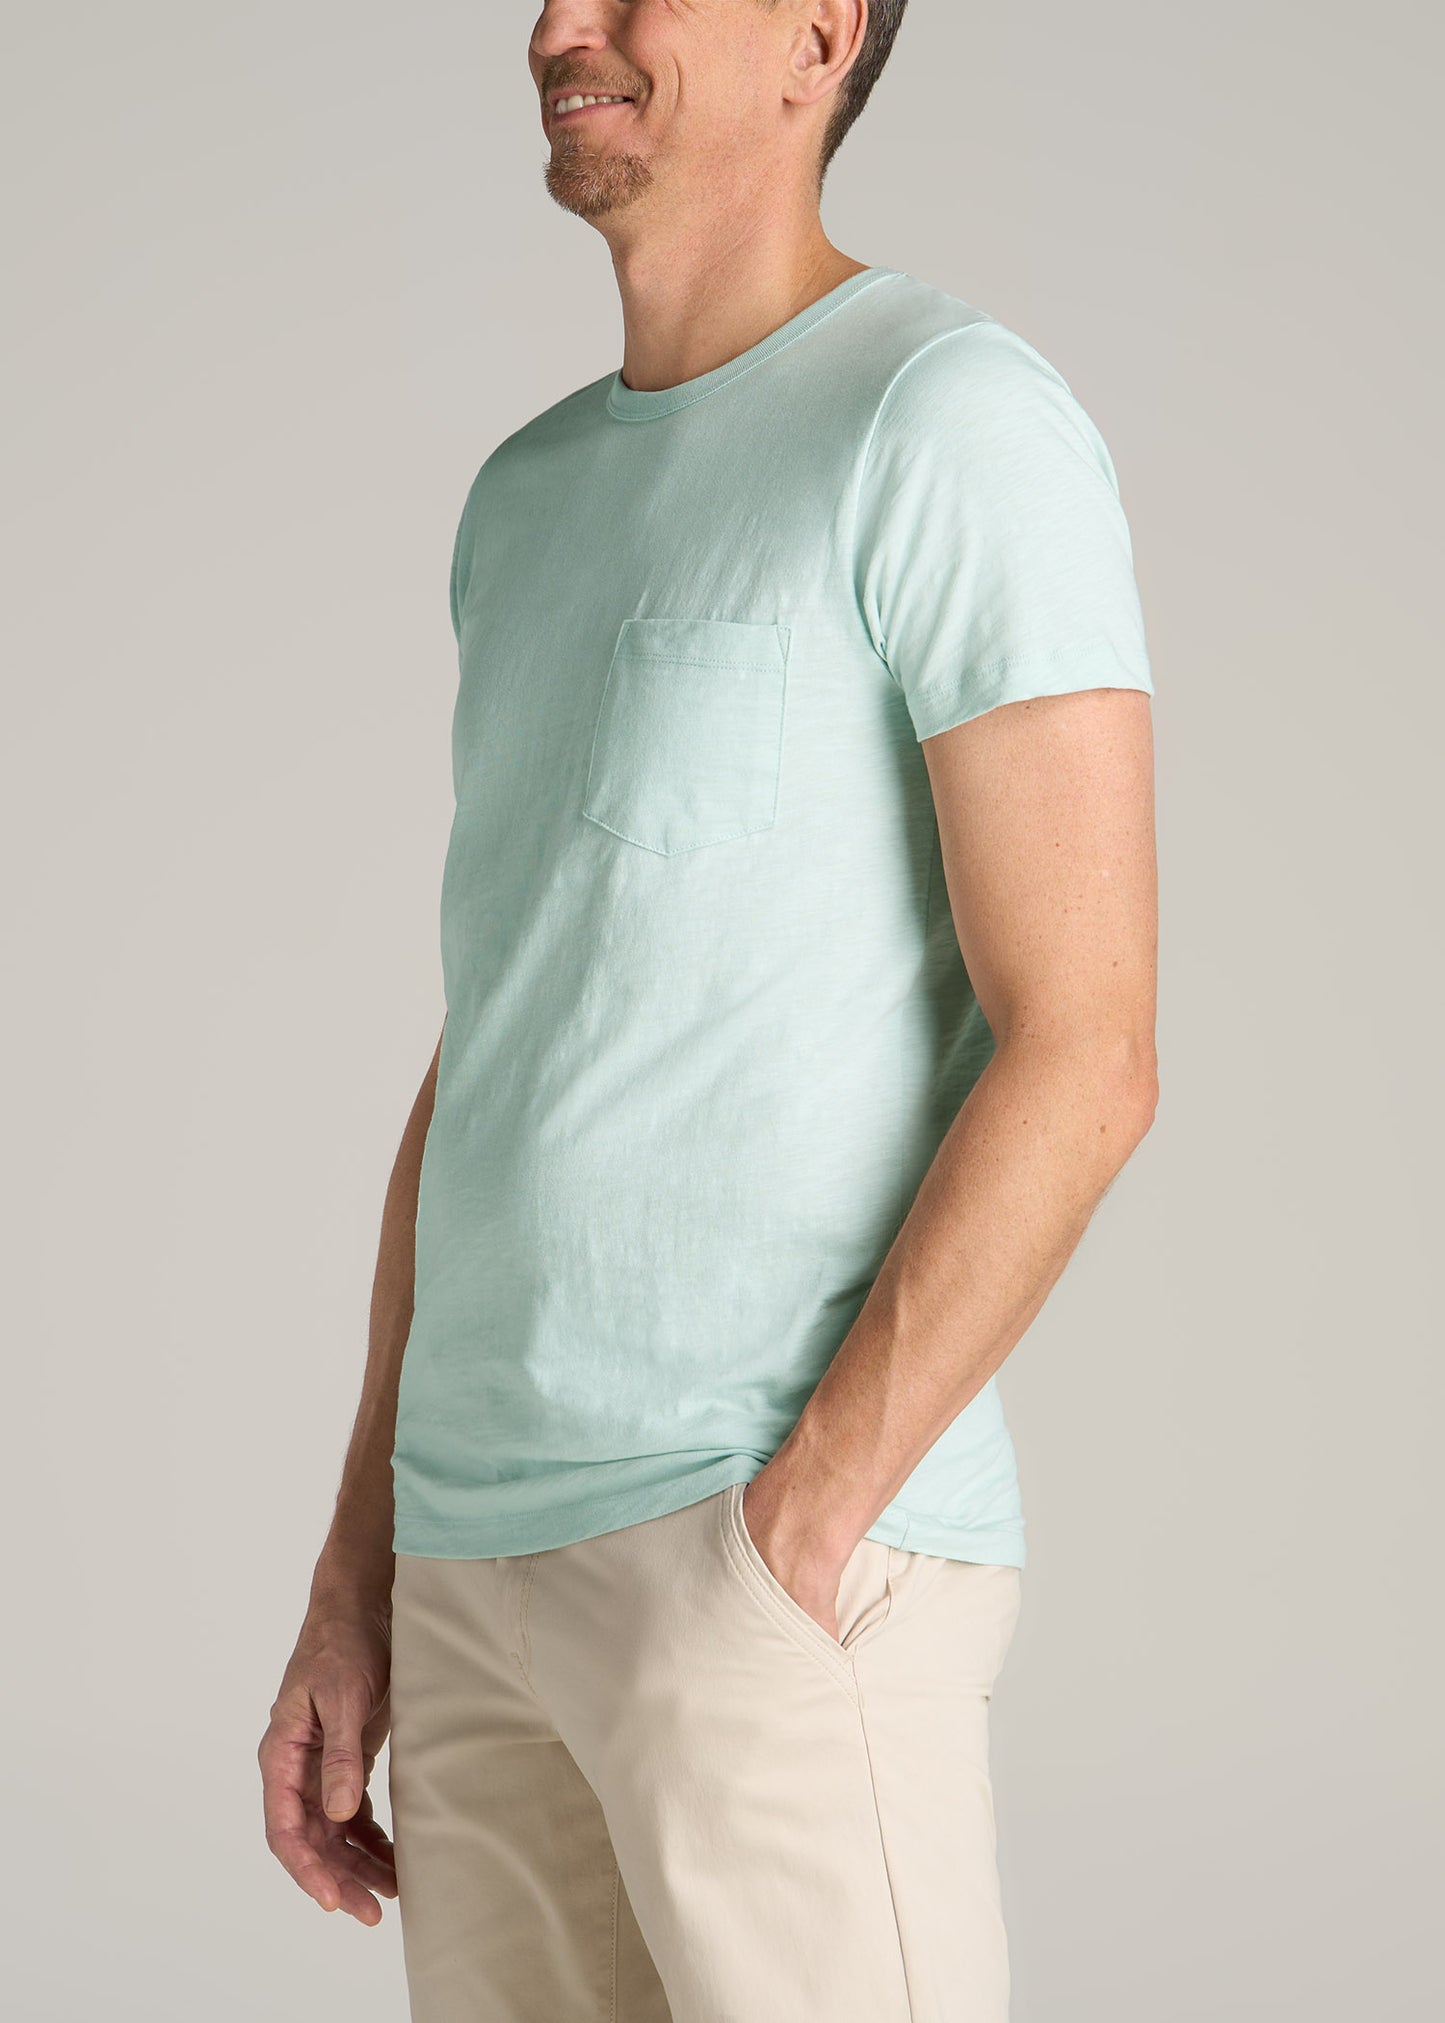 Sunwashed Slub Pocket T-Shirt For Tall Men in Mint